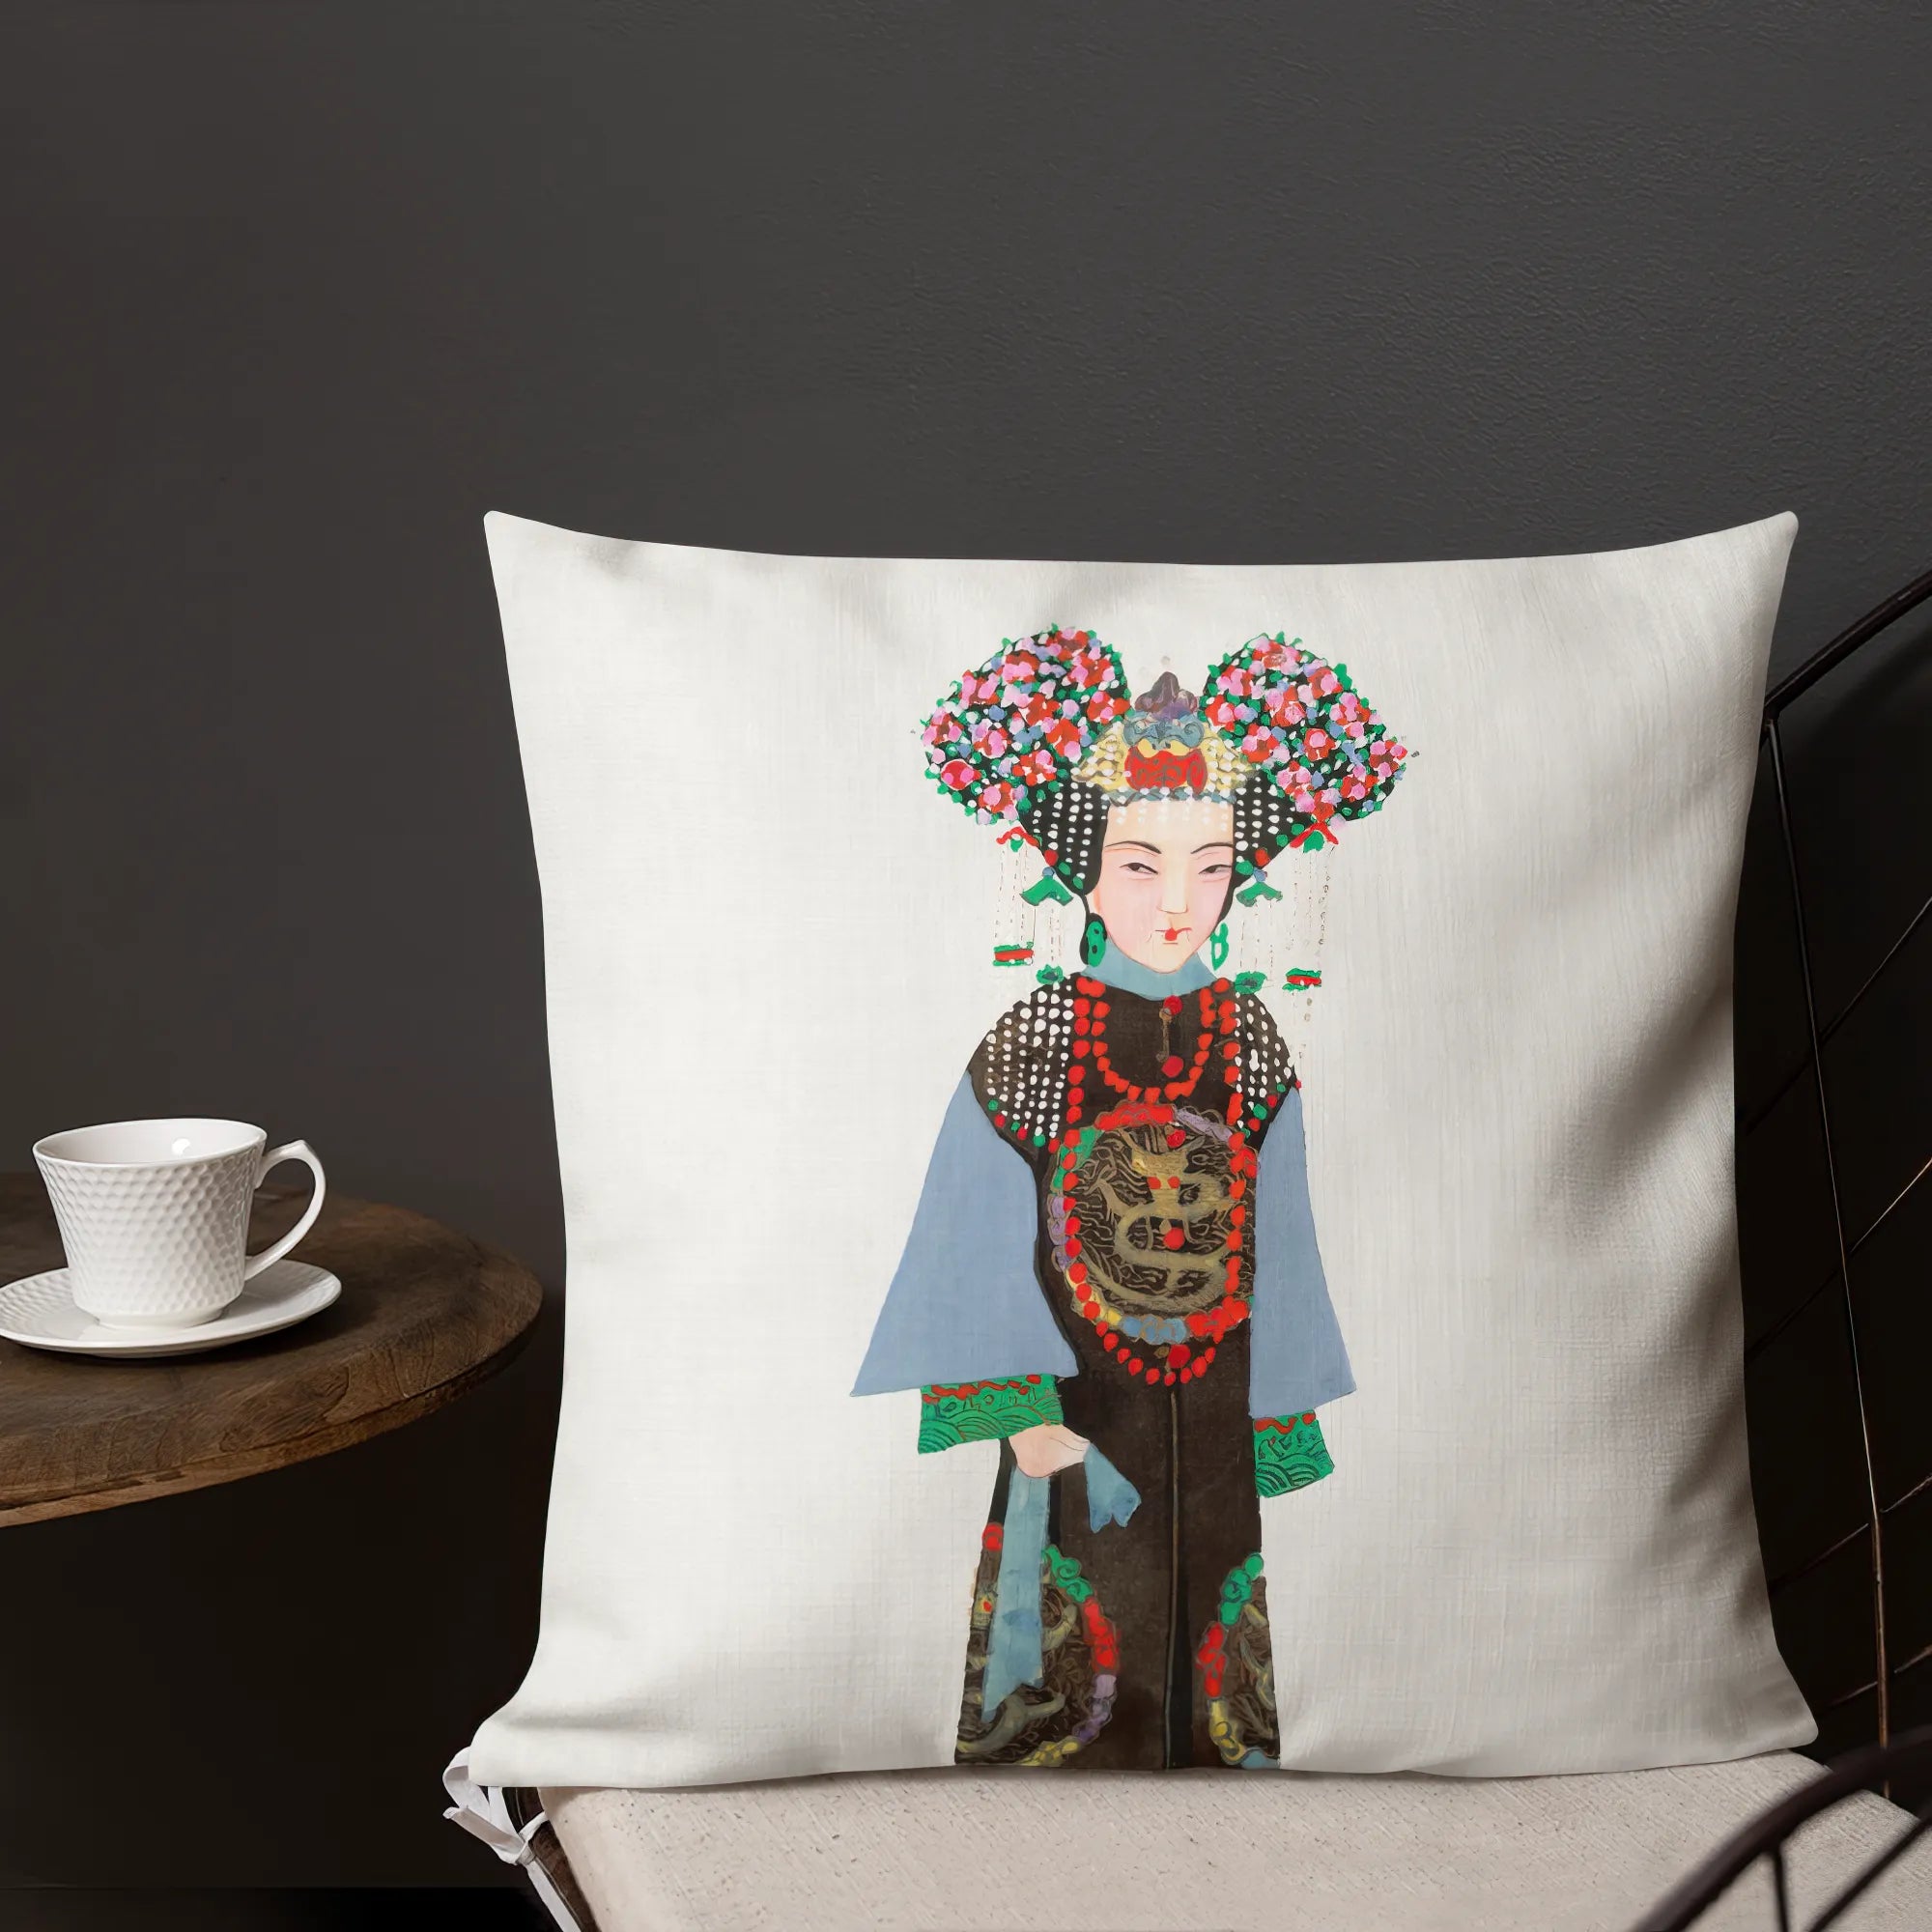 Chinese Empress Cushion - Throw Pillows - Aesthetic Art